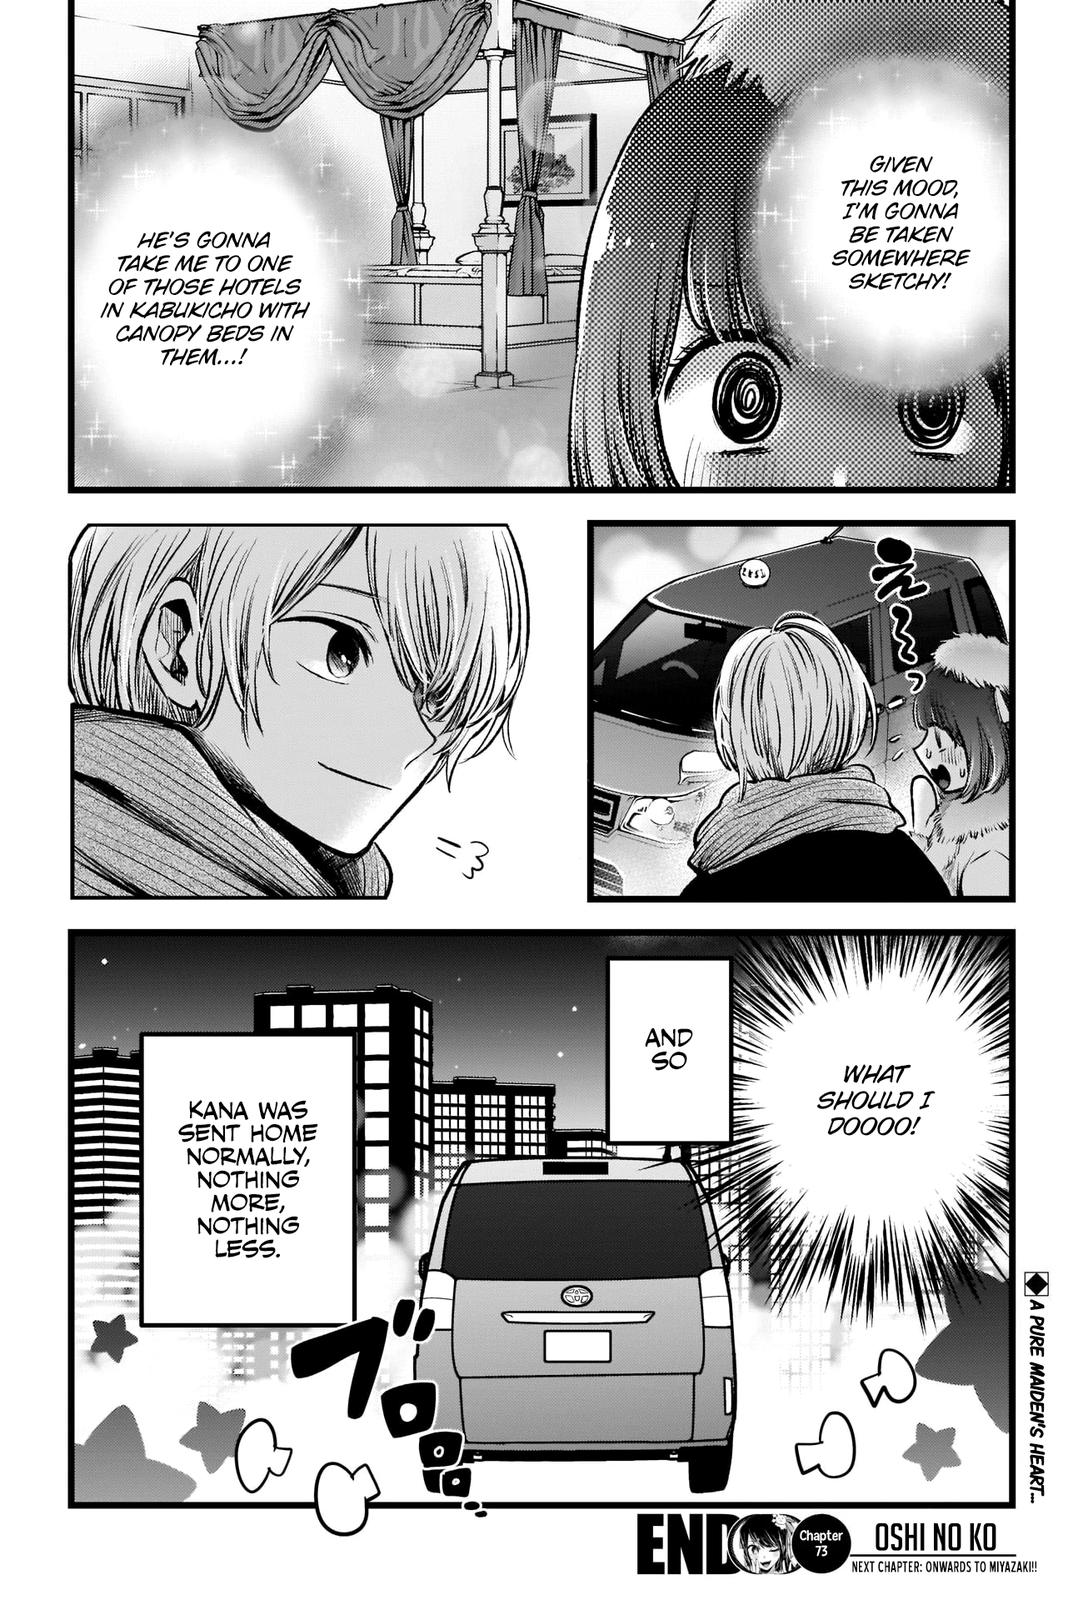 Oshi No Ko Manga Manga Chapter - 73 - image 19